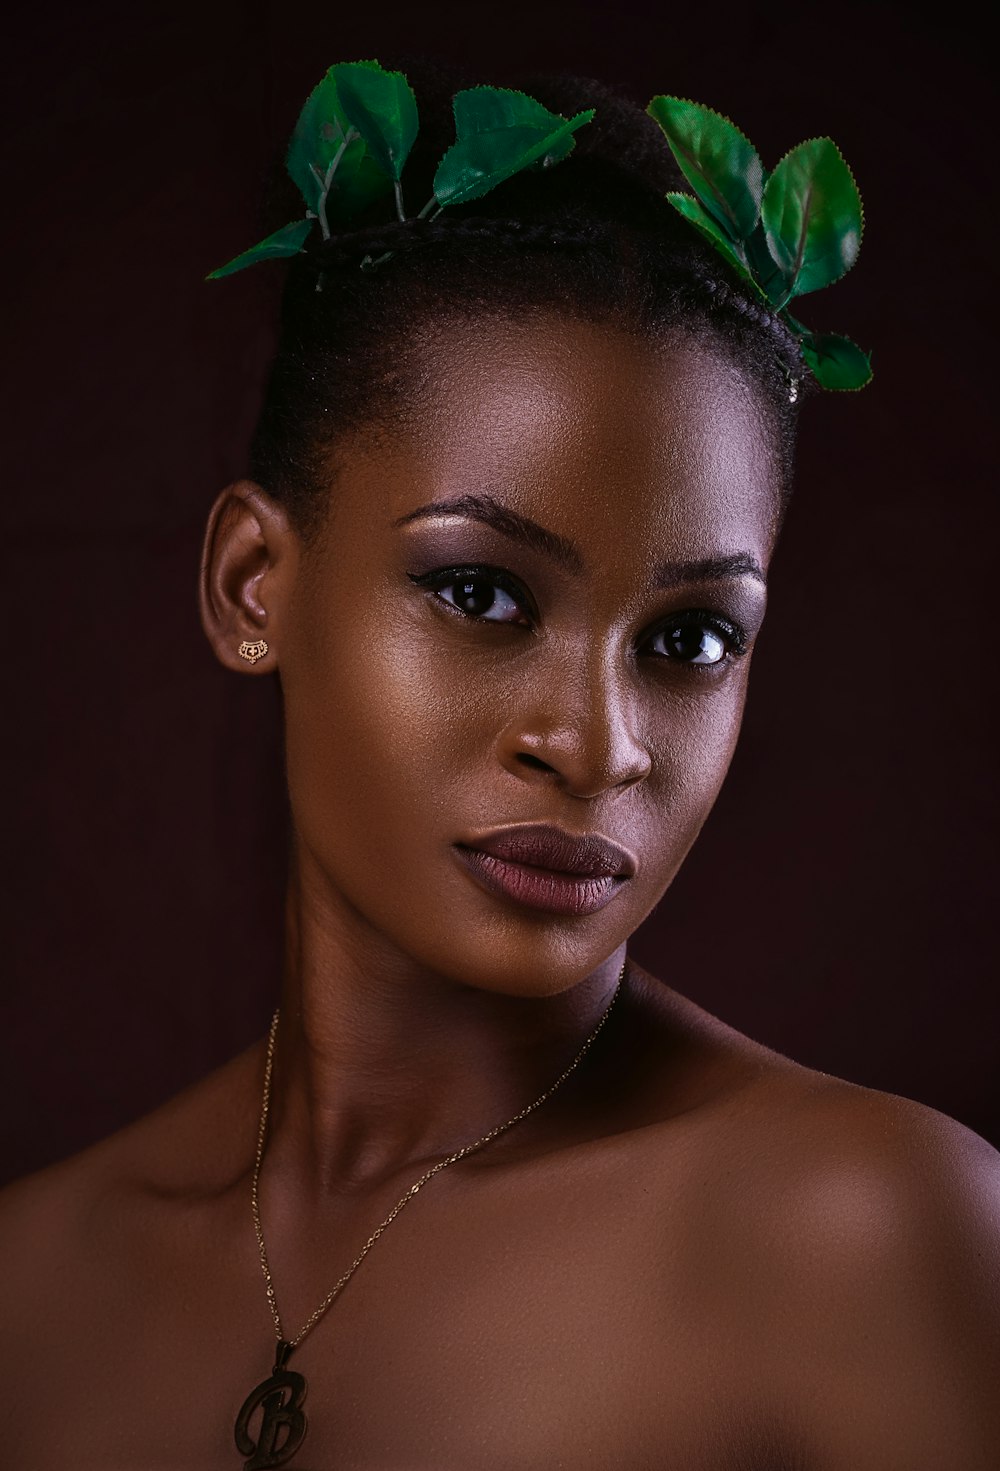 Of black women beautiful images Black Celeb